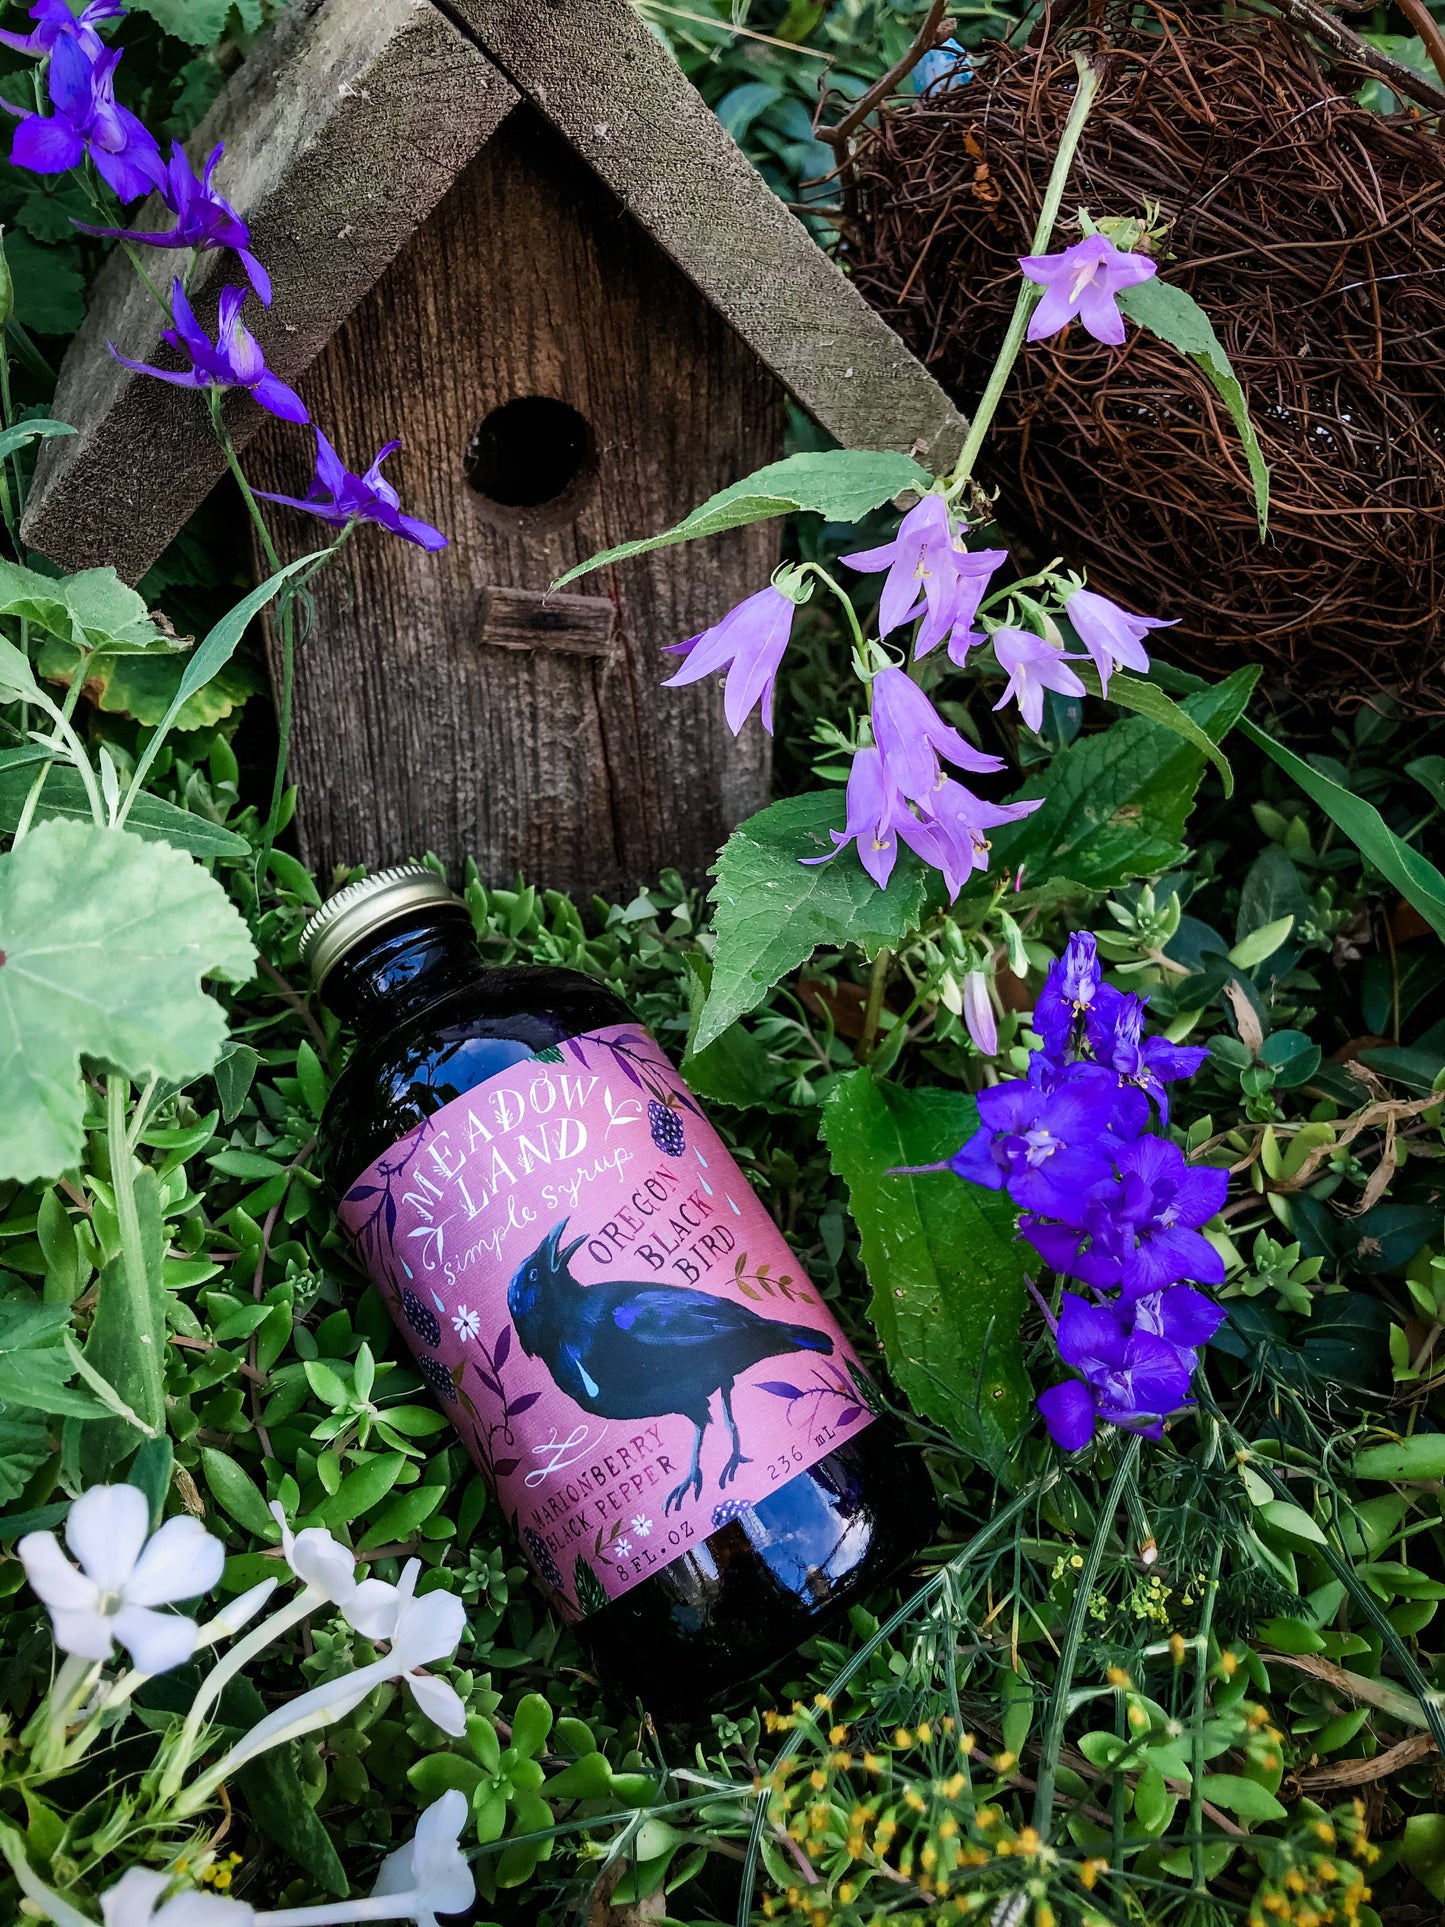 Oregon Black Bird Simple Syrup